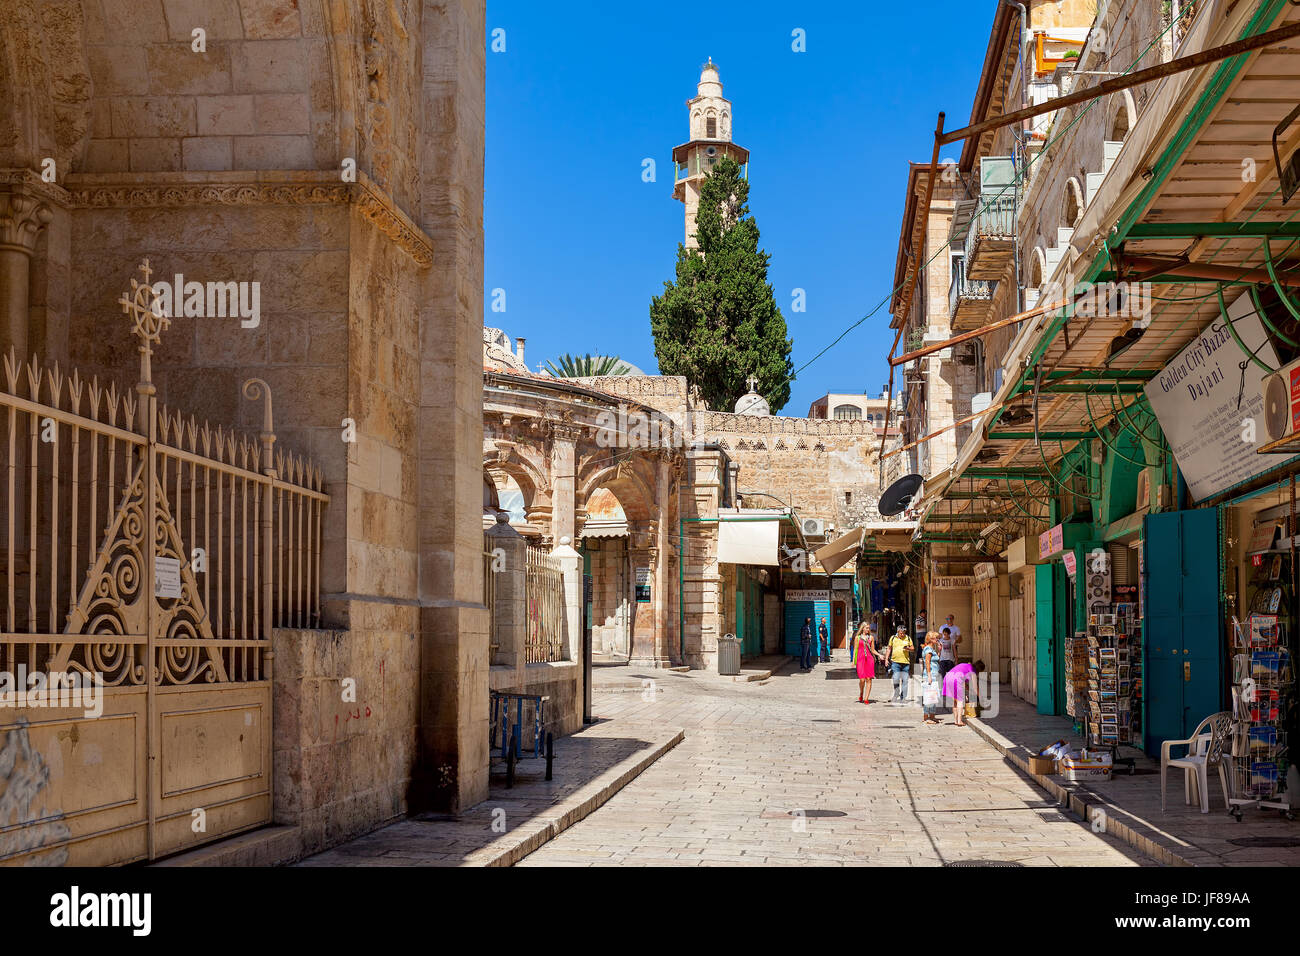 JERUSALEM, ISRAEL - JULY 04, 2016: Narrow street with souvenir shops as minaret on background in Muristan  - christian quarter, popular tourist destin Stock Photo